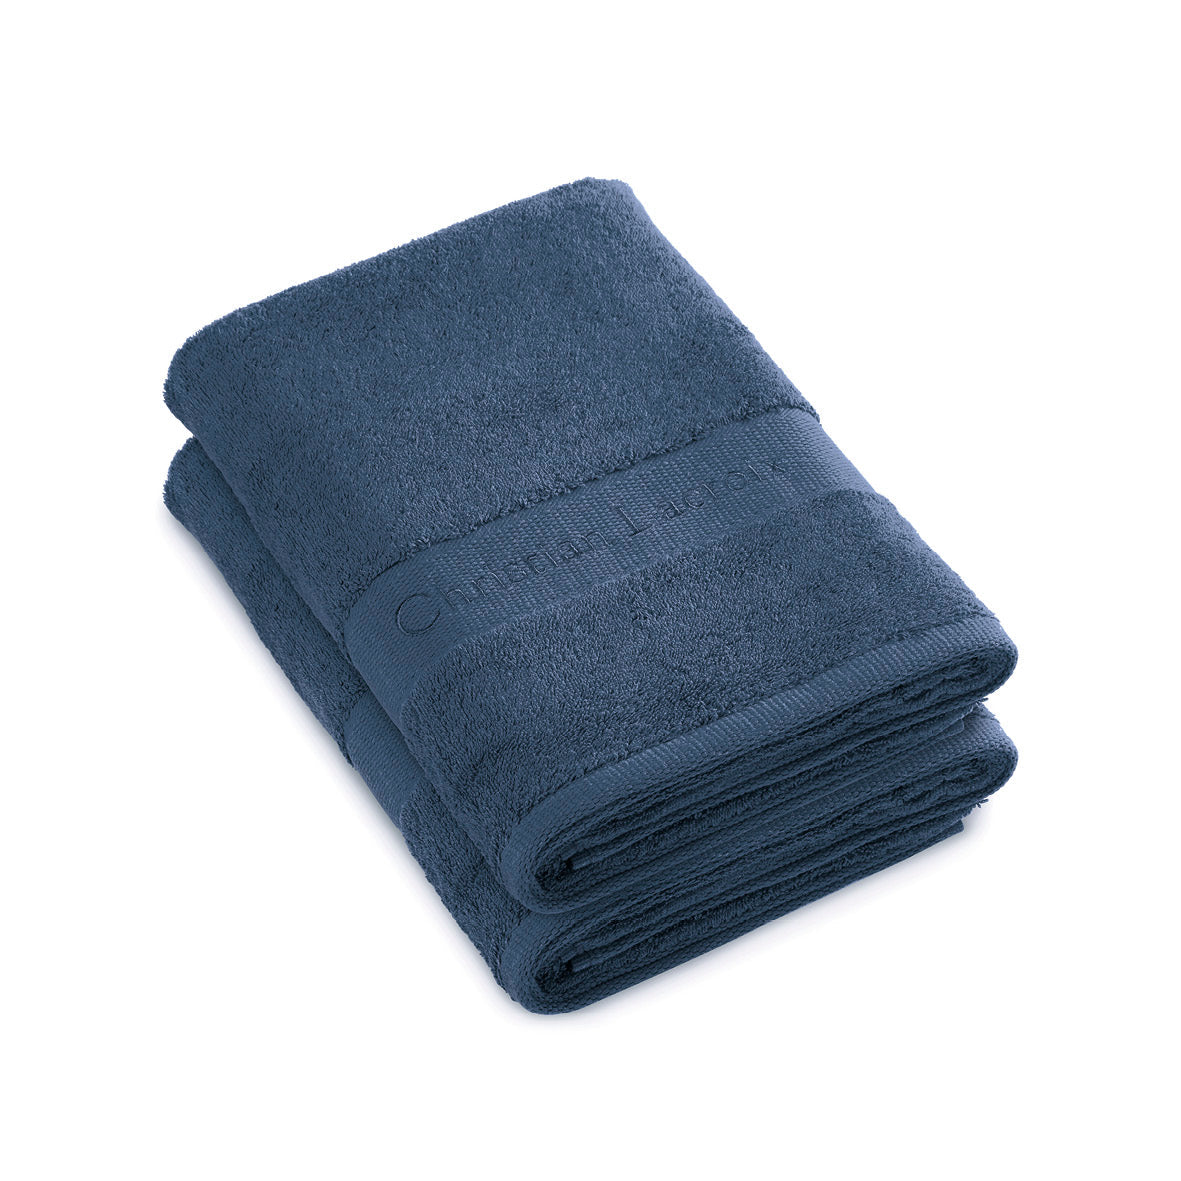 Set of 2 bath towels Navy blue